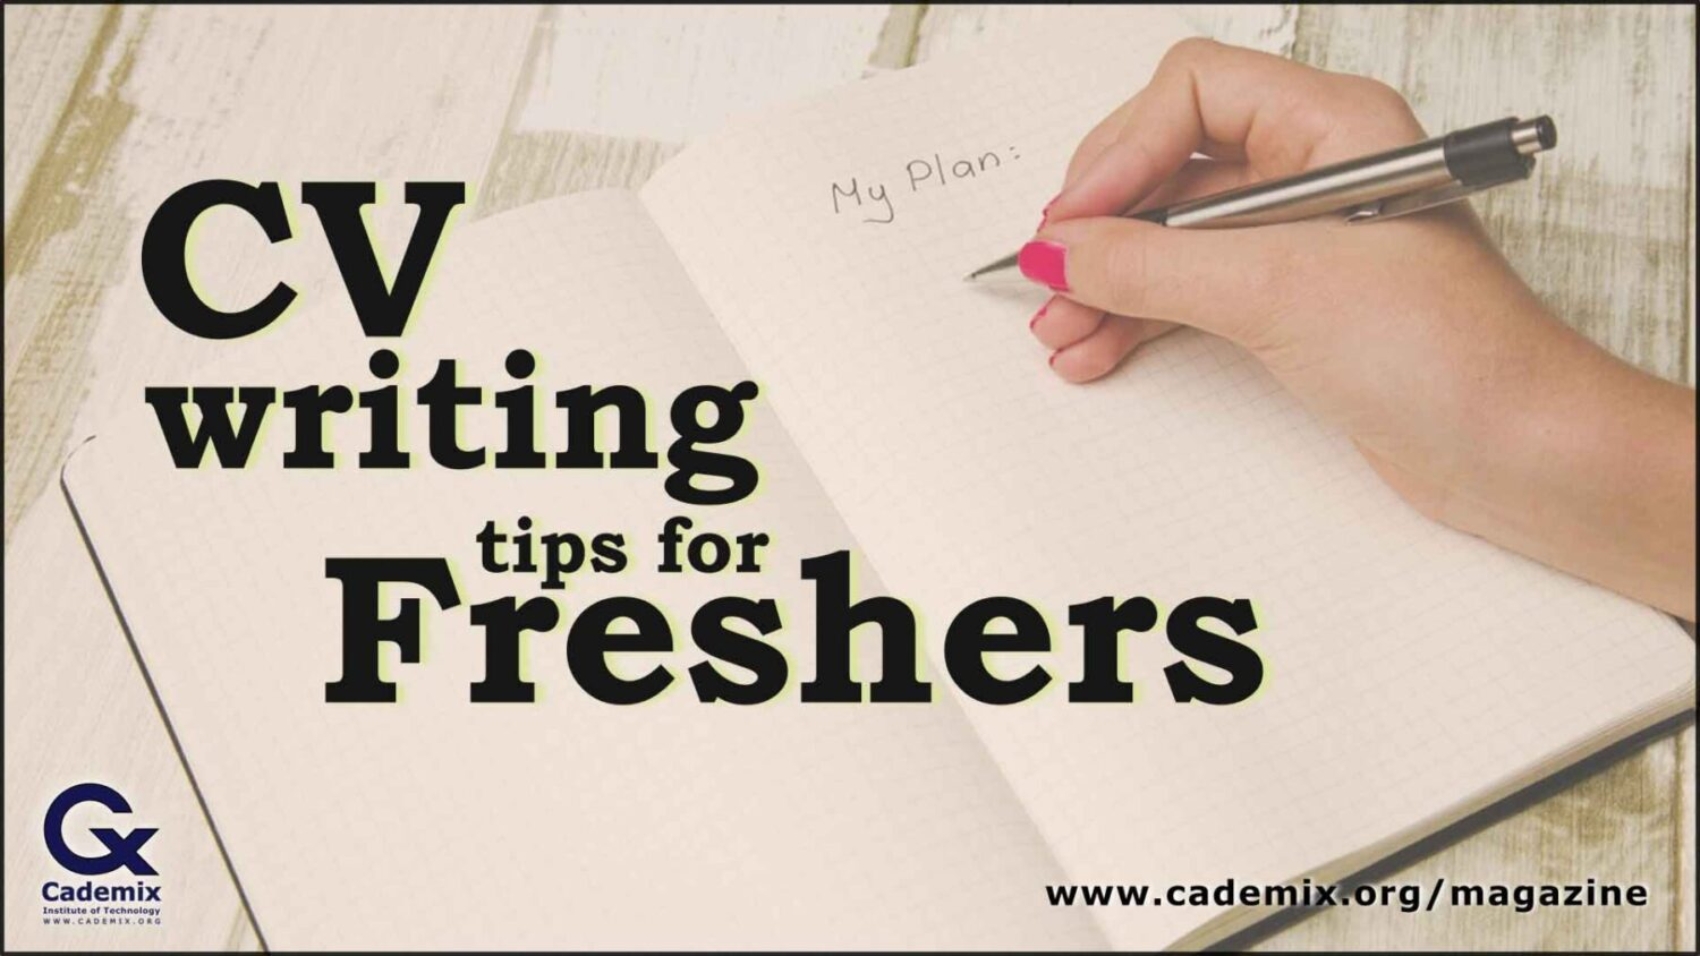 CV Writing Tips for freshers Cademix Article Lindah Awuor